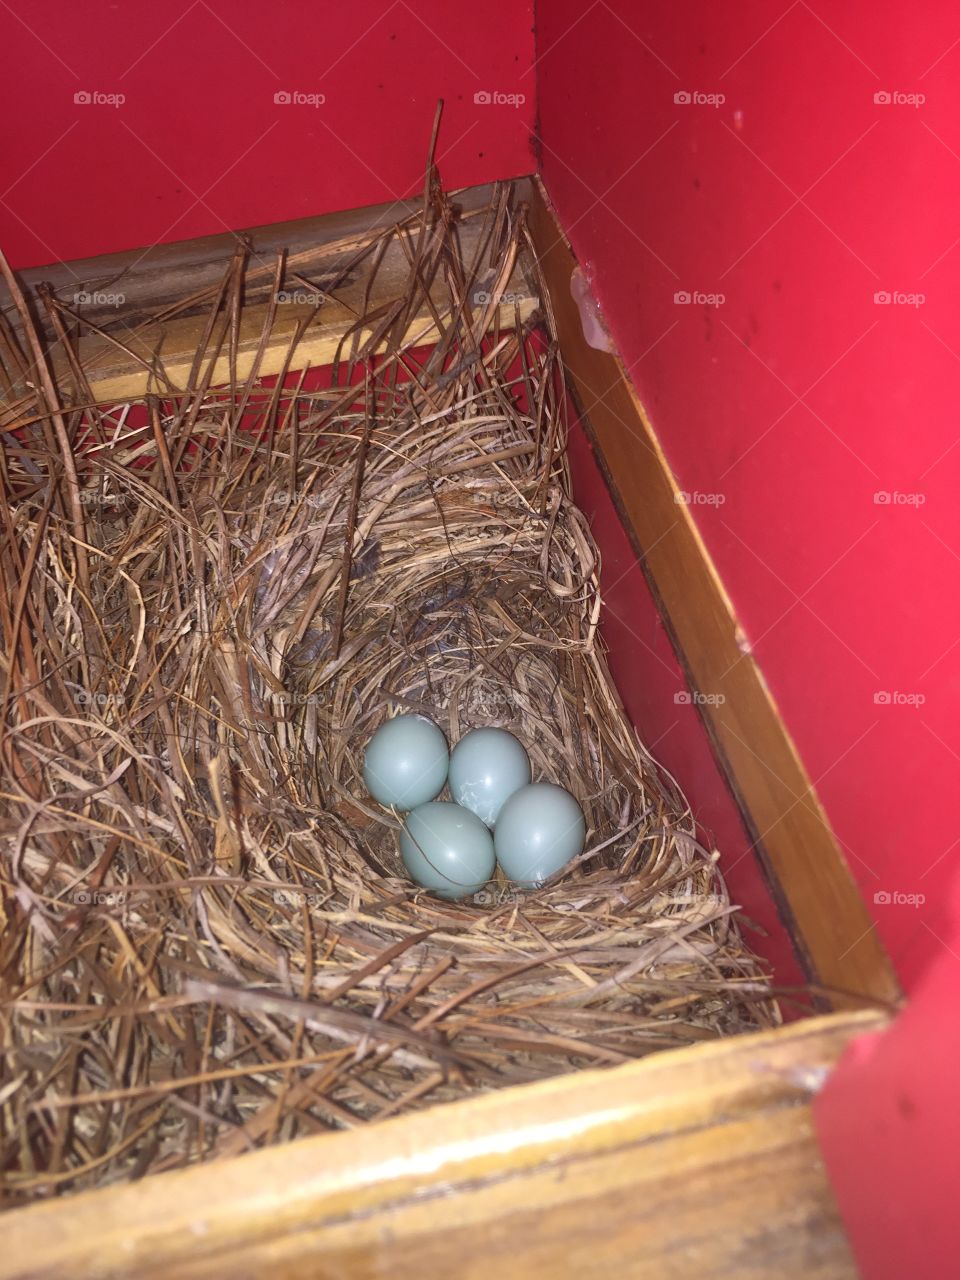 Birdhouse has 4 blue, blue bird eggs. It’s spring. 